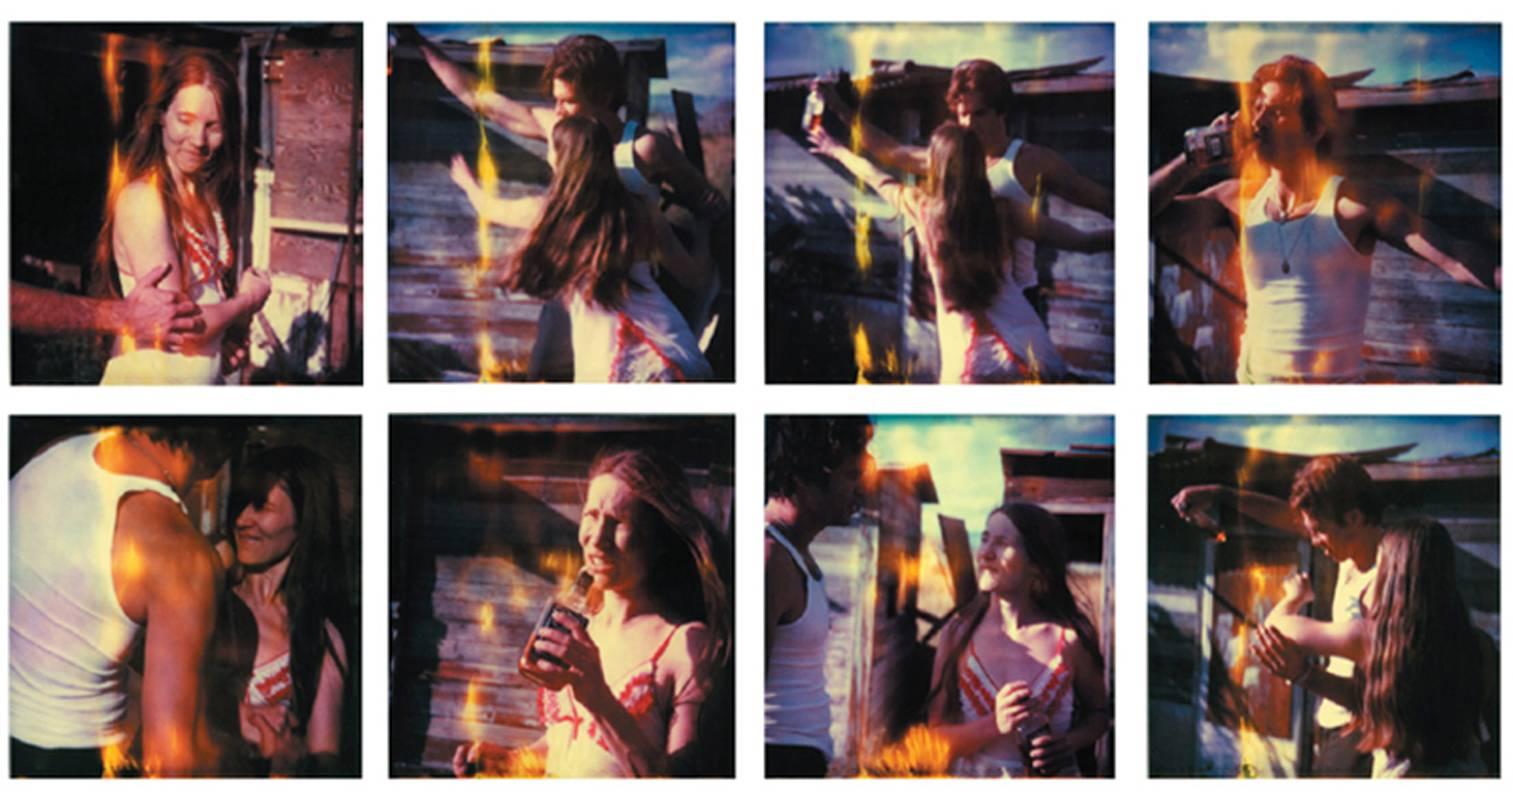 Stefanie Schneider Color Photograph - Whisky Dance I - Sidewinder - 8 pieces, analog, 82x80cm each